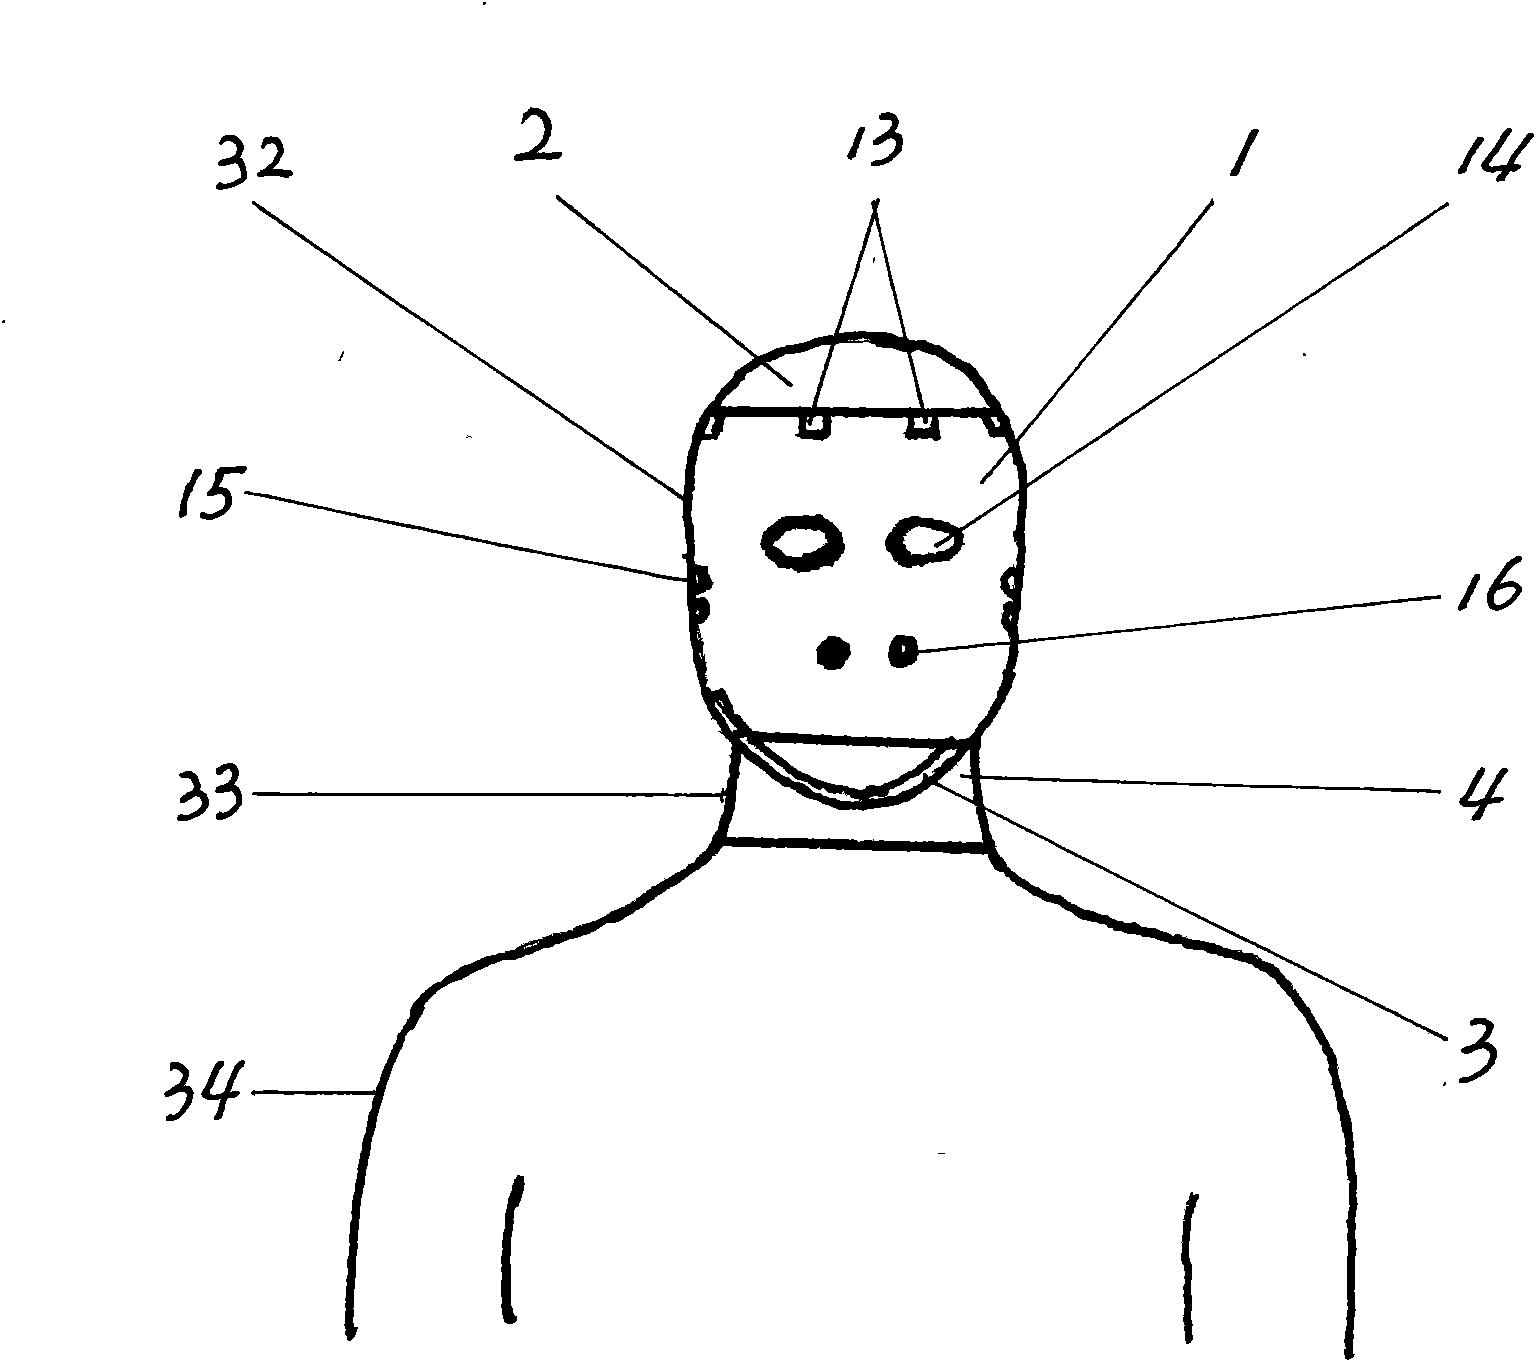 Head and neck health care rehabilitation apparatus